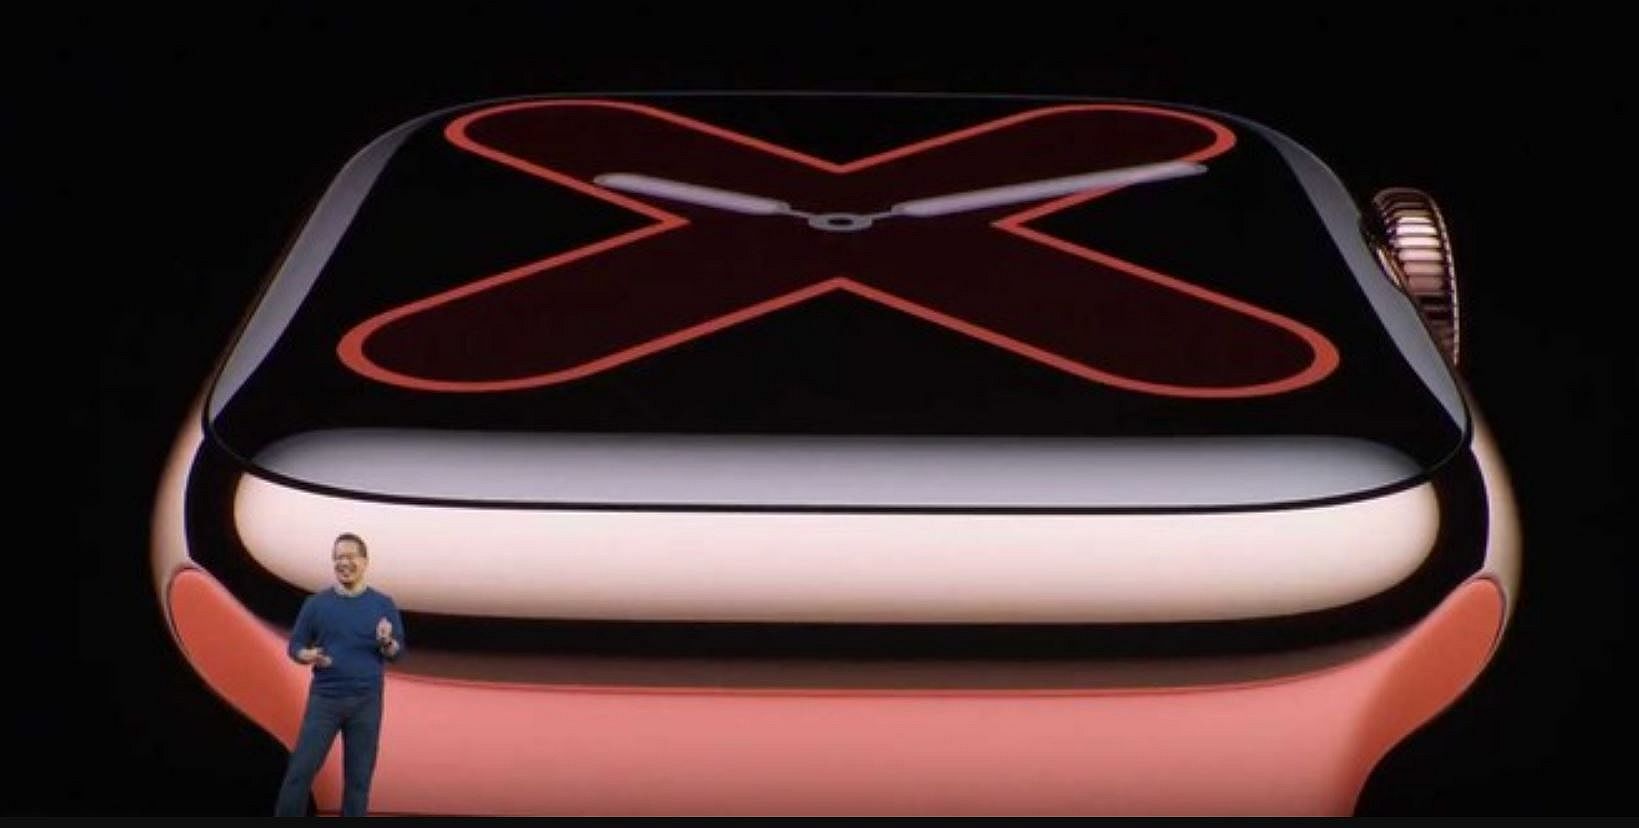 L'Apple Watch Series 5 introduce (finalmente) il display always-on